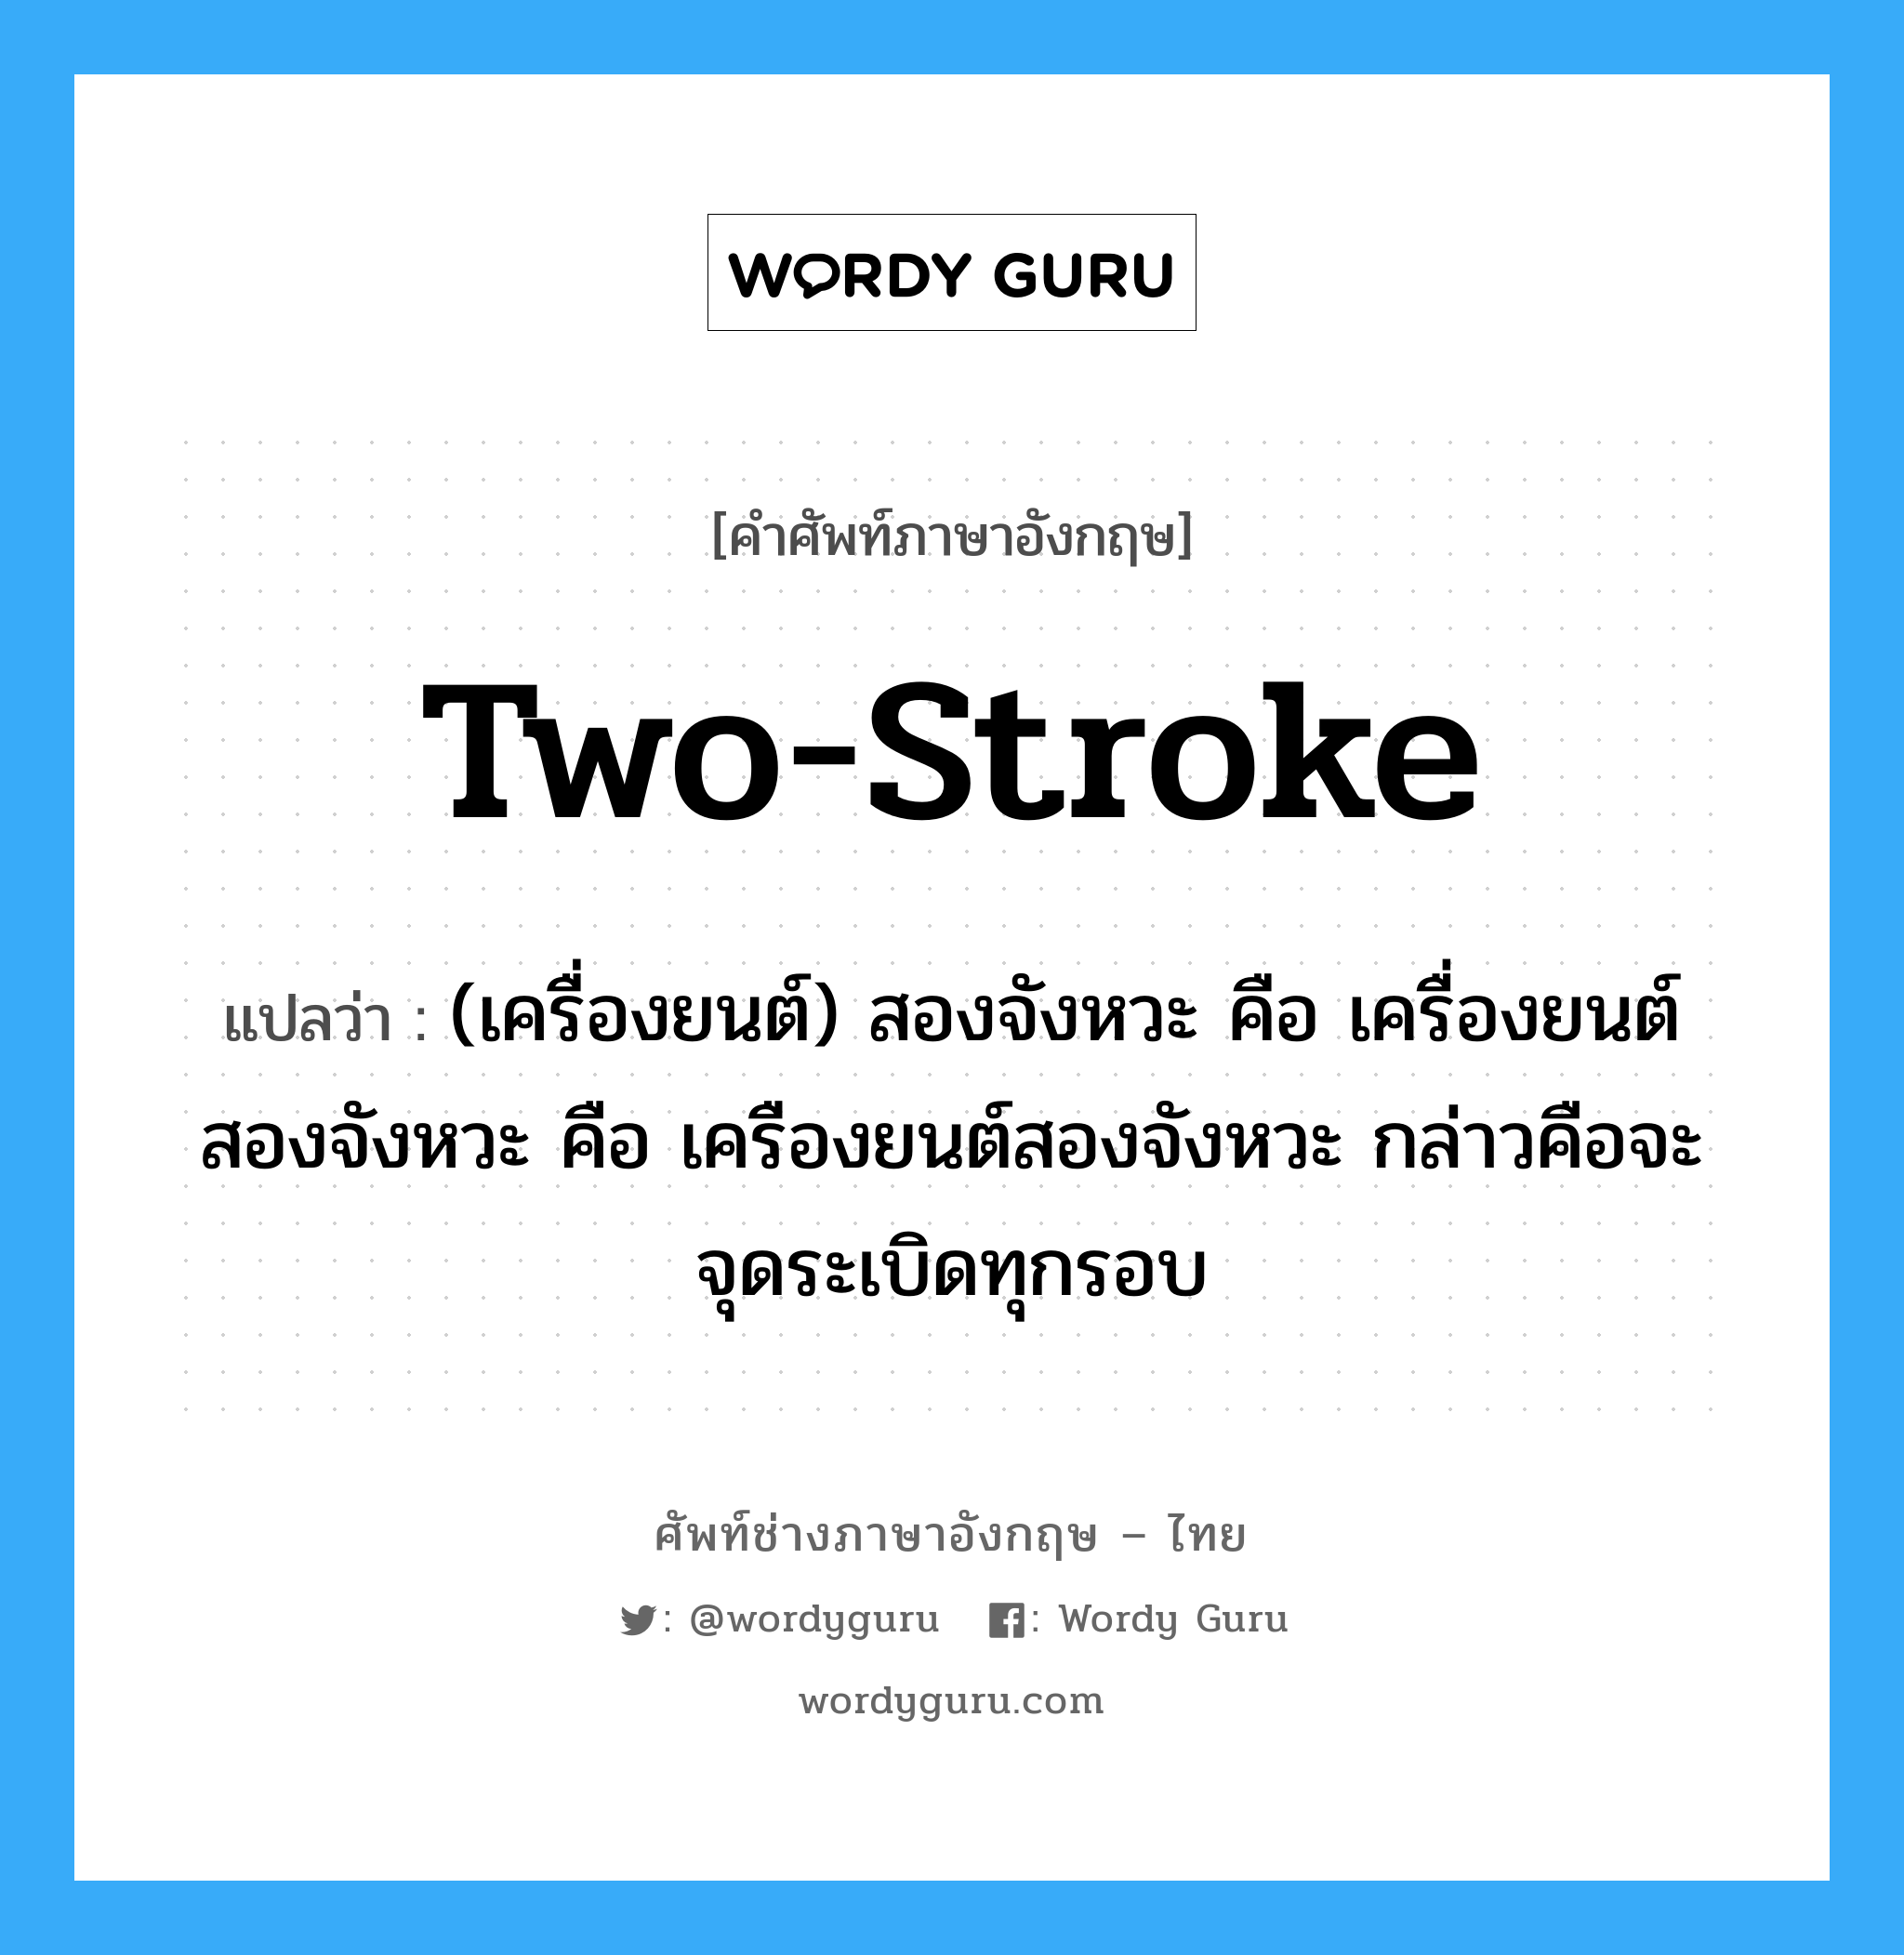 two-stroke แปลว่า?, คำศัพท์ช่างภาษาอังกฤษ - ไทย two-stroke คำศัพท์ภาษาอังกฤษ two-stroke แปลว่า (เครื่องยนต์) สองจังหวะ คือ เครื่องยนต์สองจังหวะ คือ เครืองยนต์สองจังหวะ กล่าวคือจะจุดระเบิดทุกรอบ